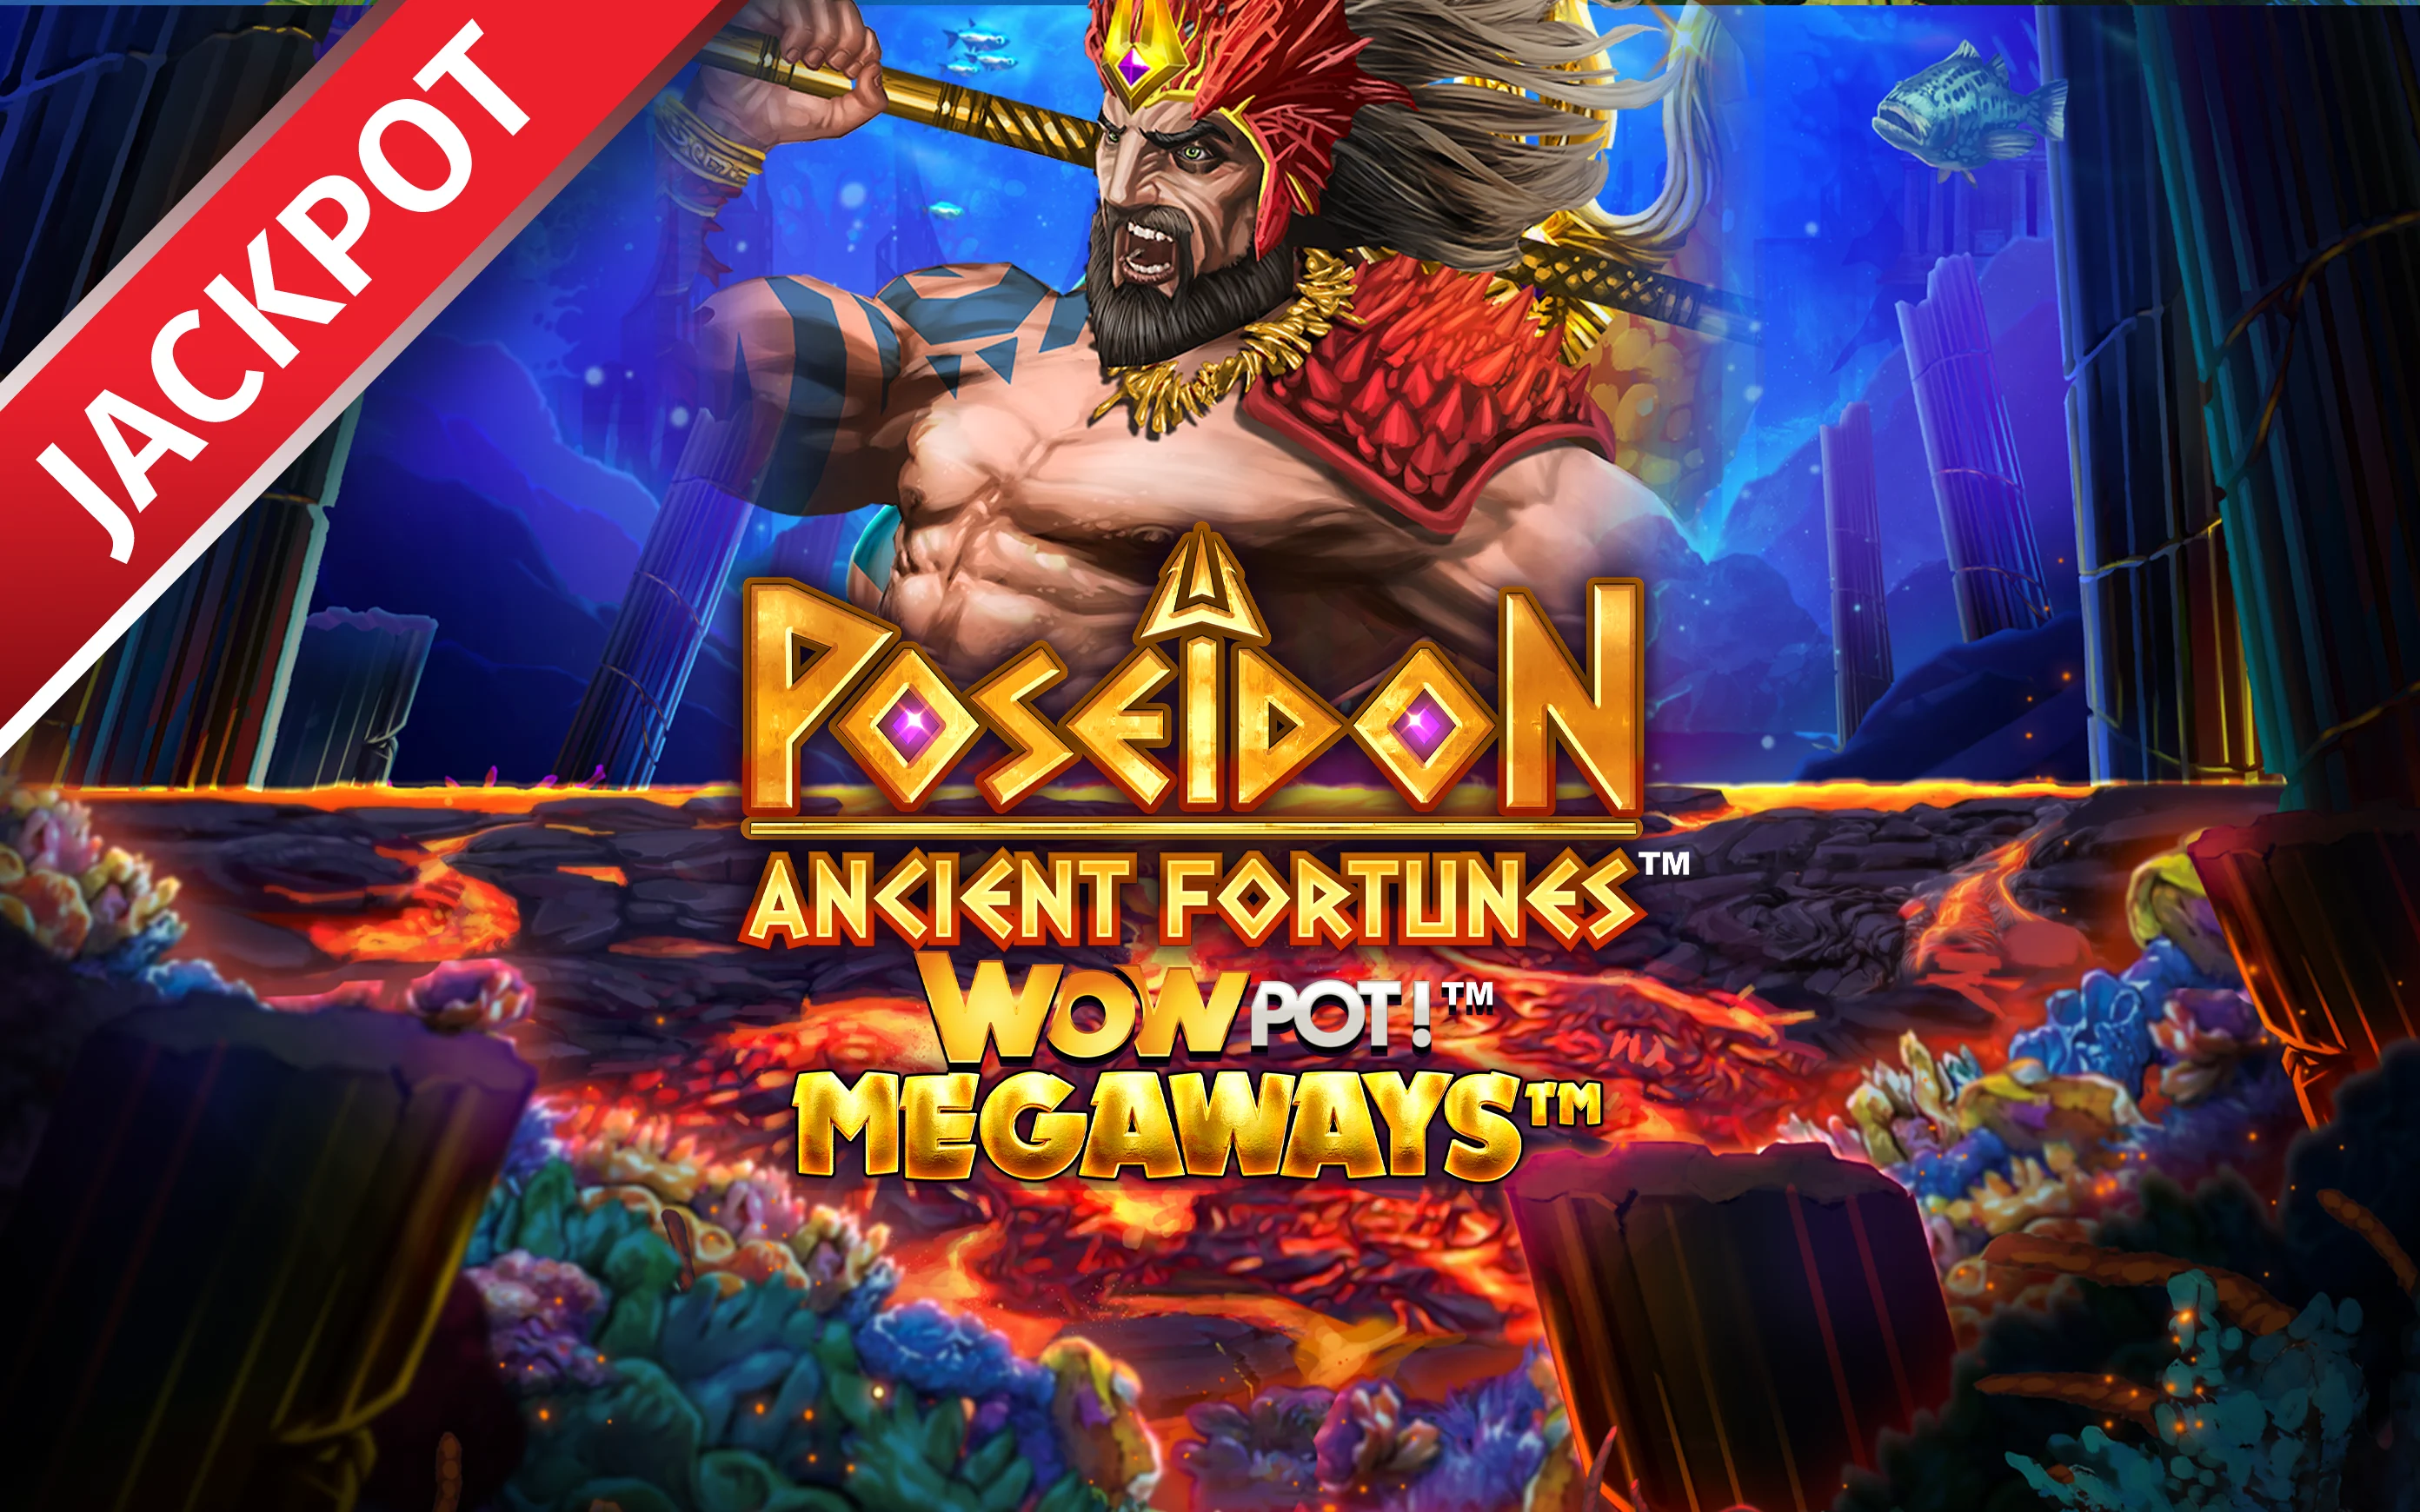 Joacă Ancient Fortunes: Poseidon™ WowPot! MEGAWAYS™ în cazinoul online Starcasino.be